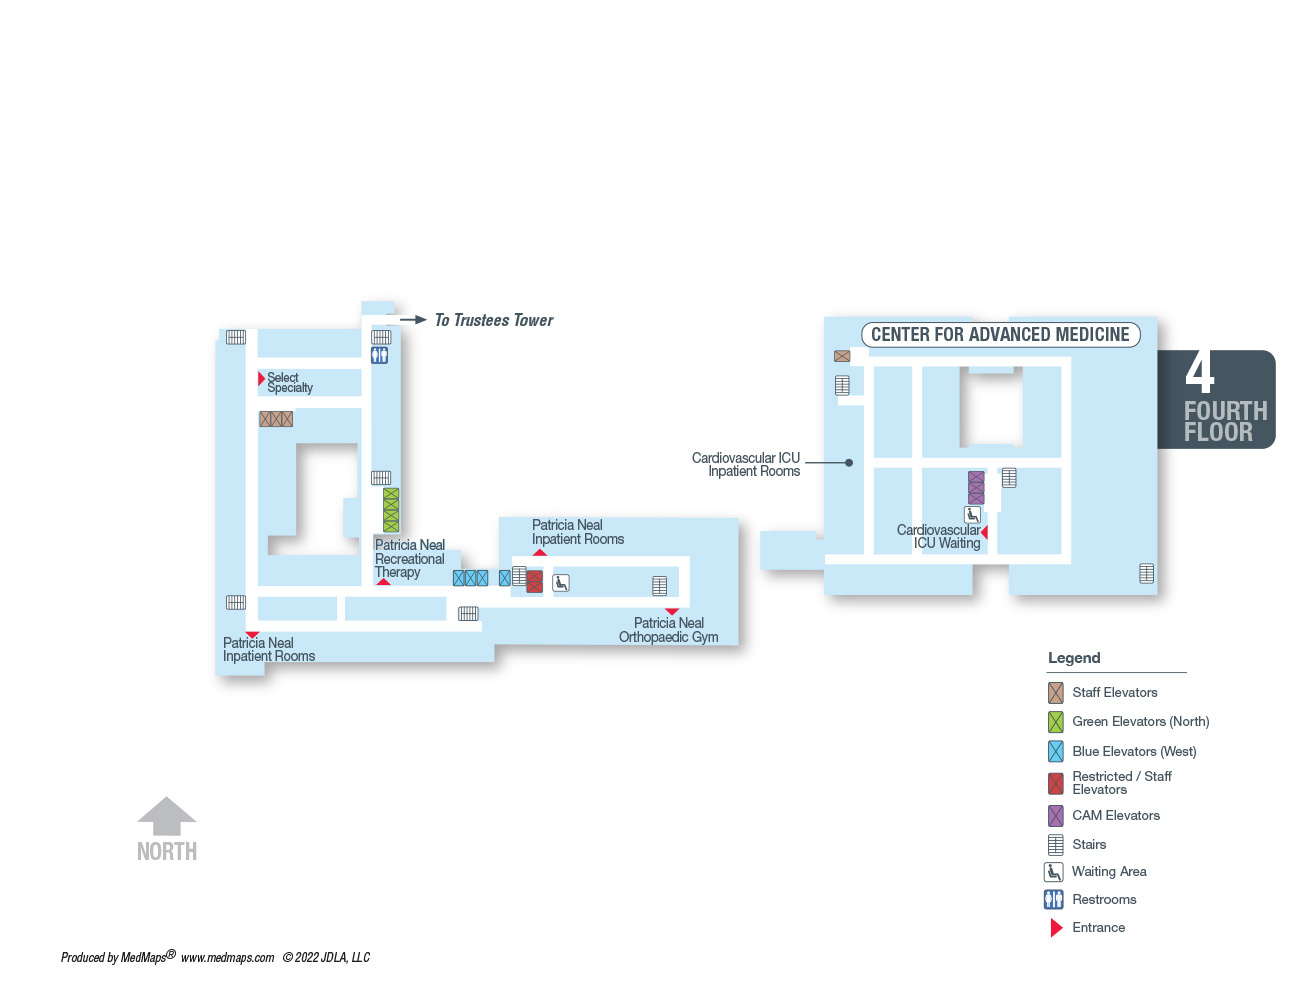 Fort Sanders Regional Medical Center Interactive Map